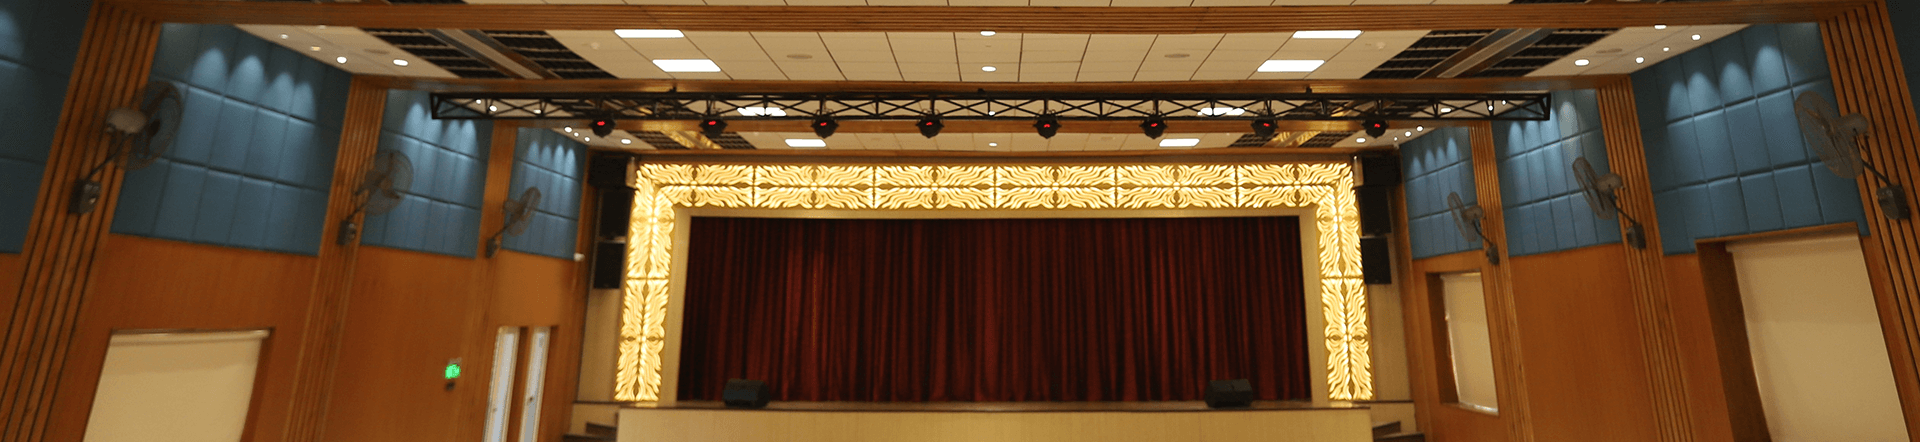 Canadian Douglas Fir - Acoustic Panels In A School Auditorium, Ambala